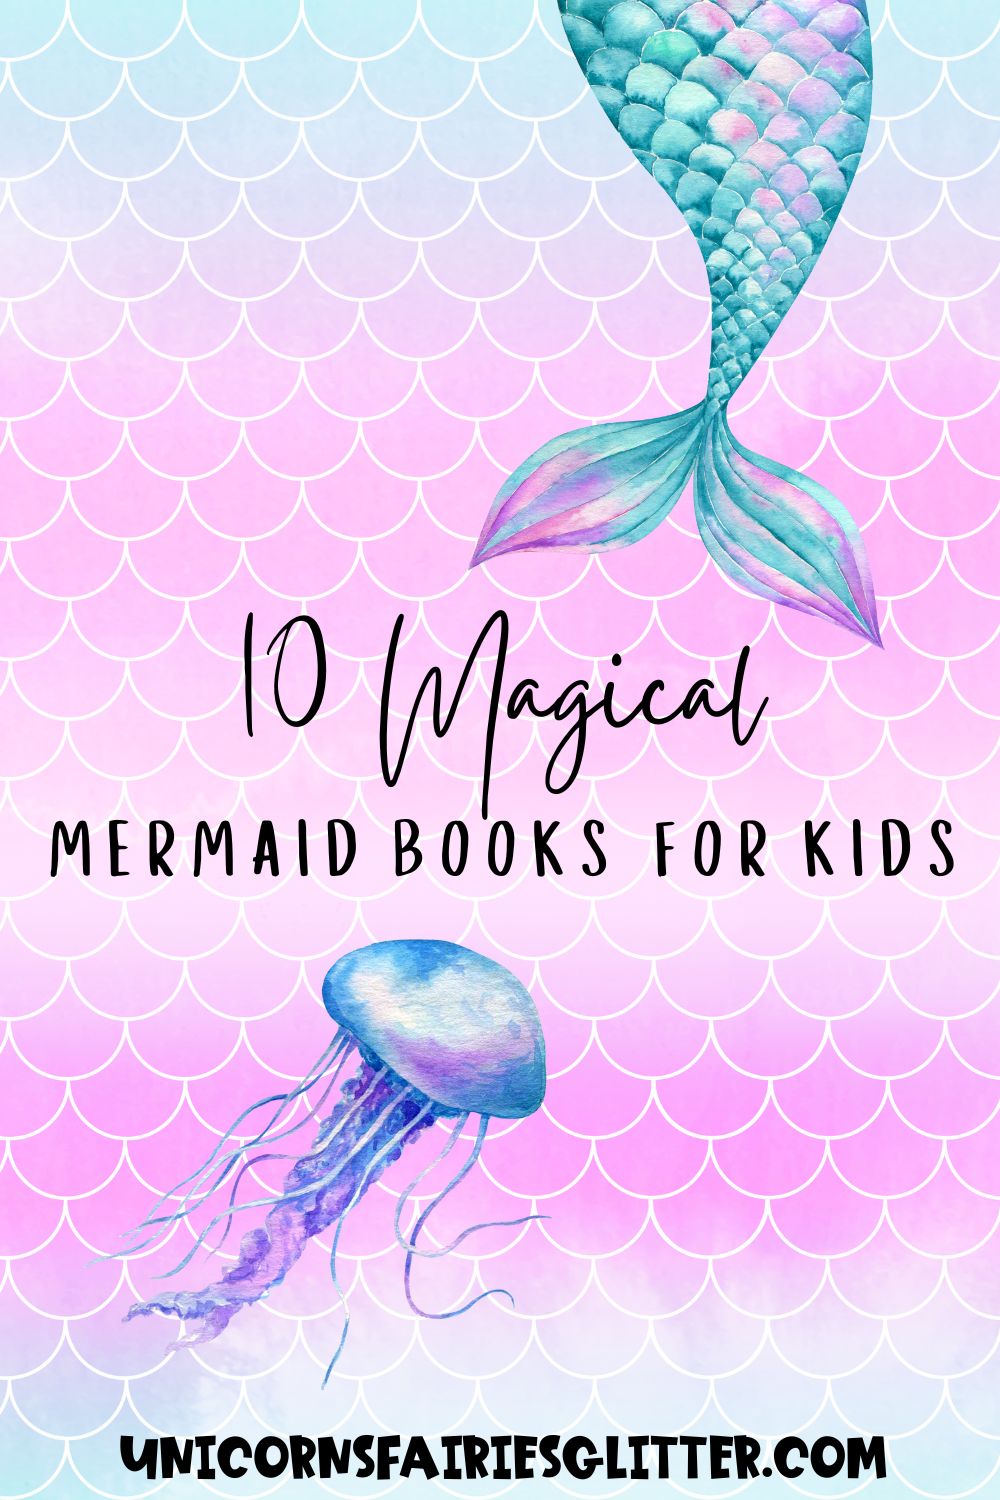 10 MAGICAL MERMAID BOOKS